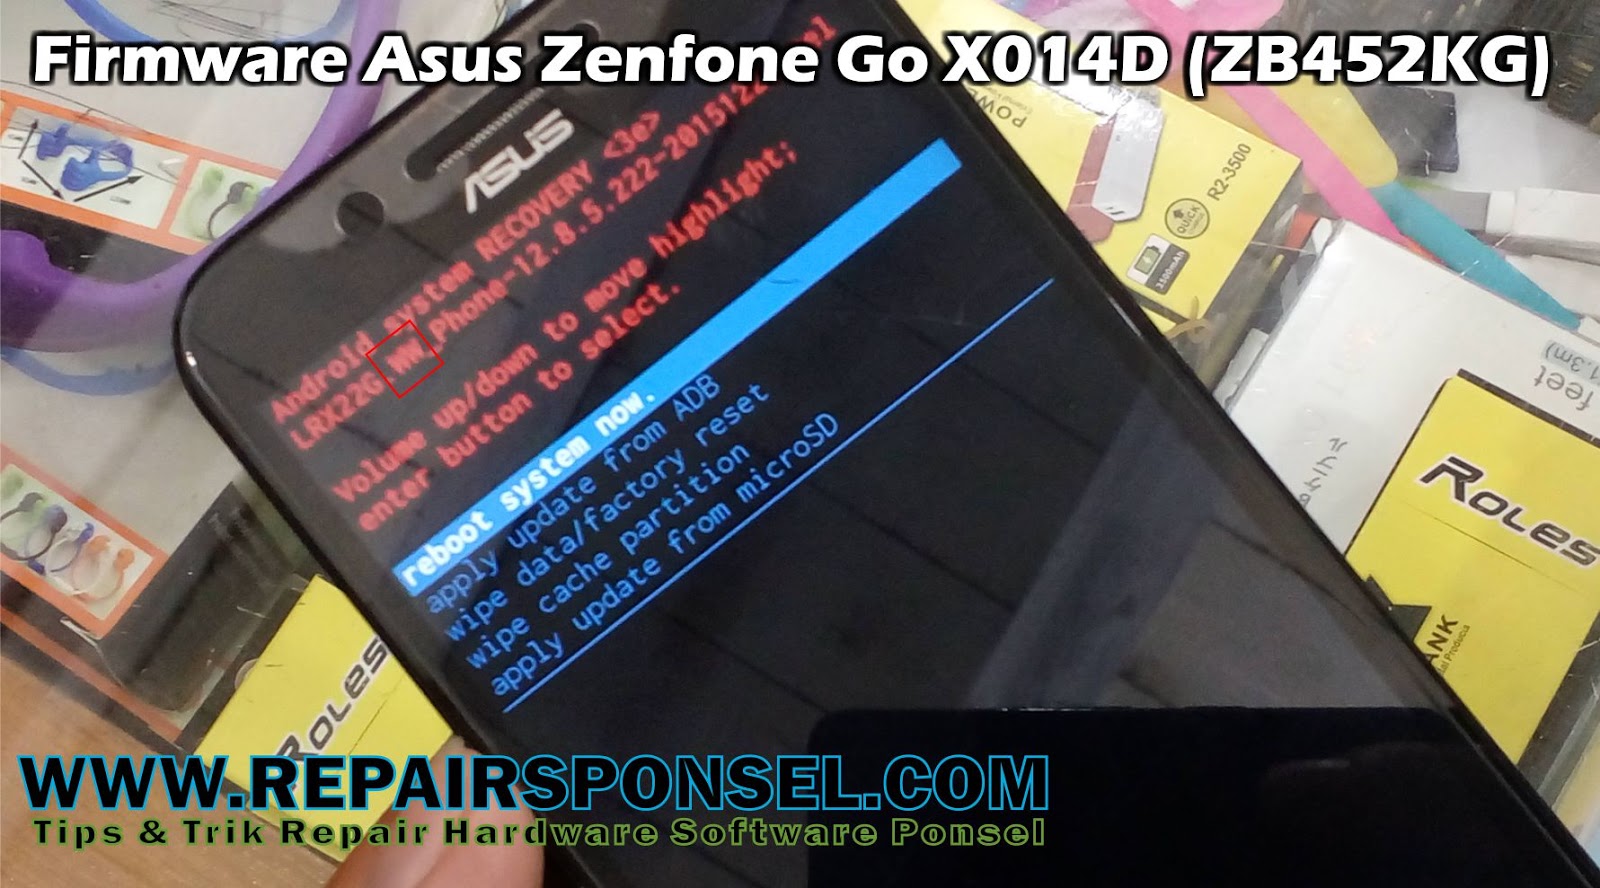 Firmware Asus Zenfone Go X014D (ZB452KG) - Repairs Ponsel